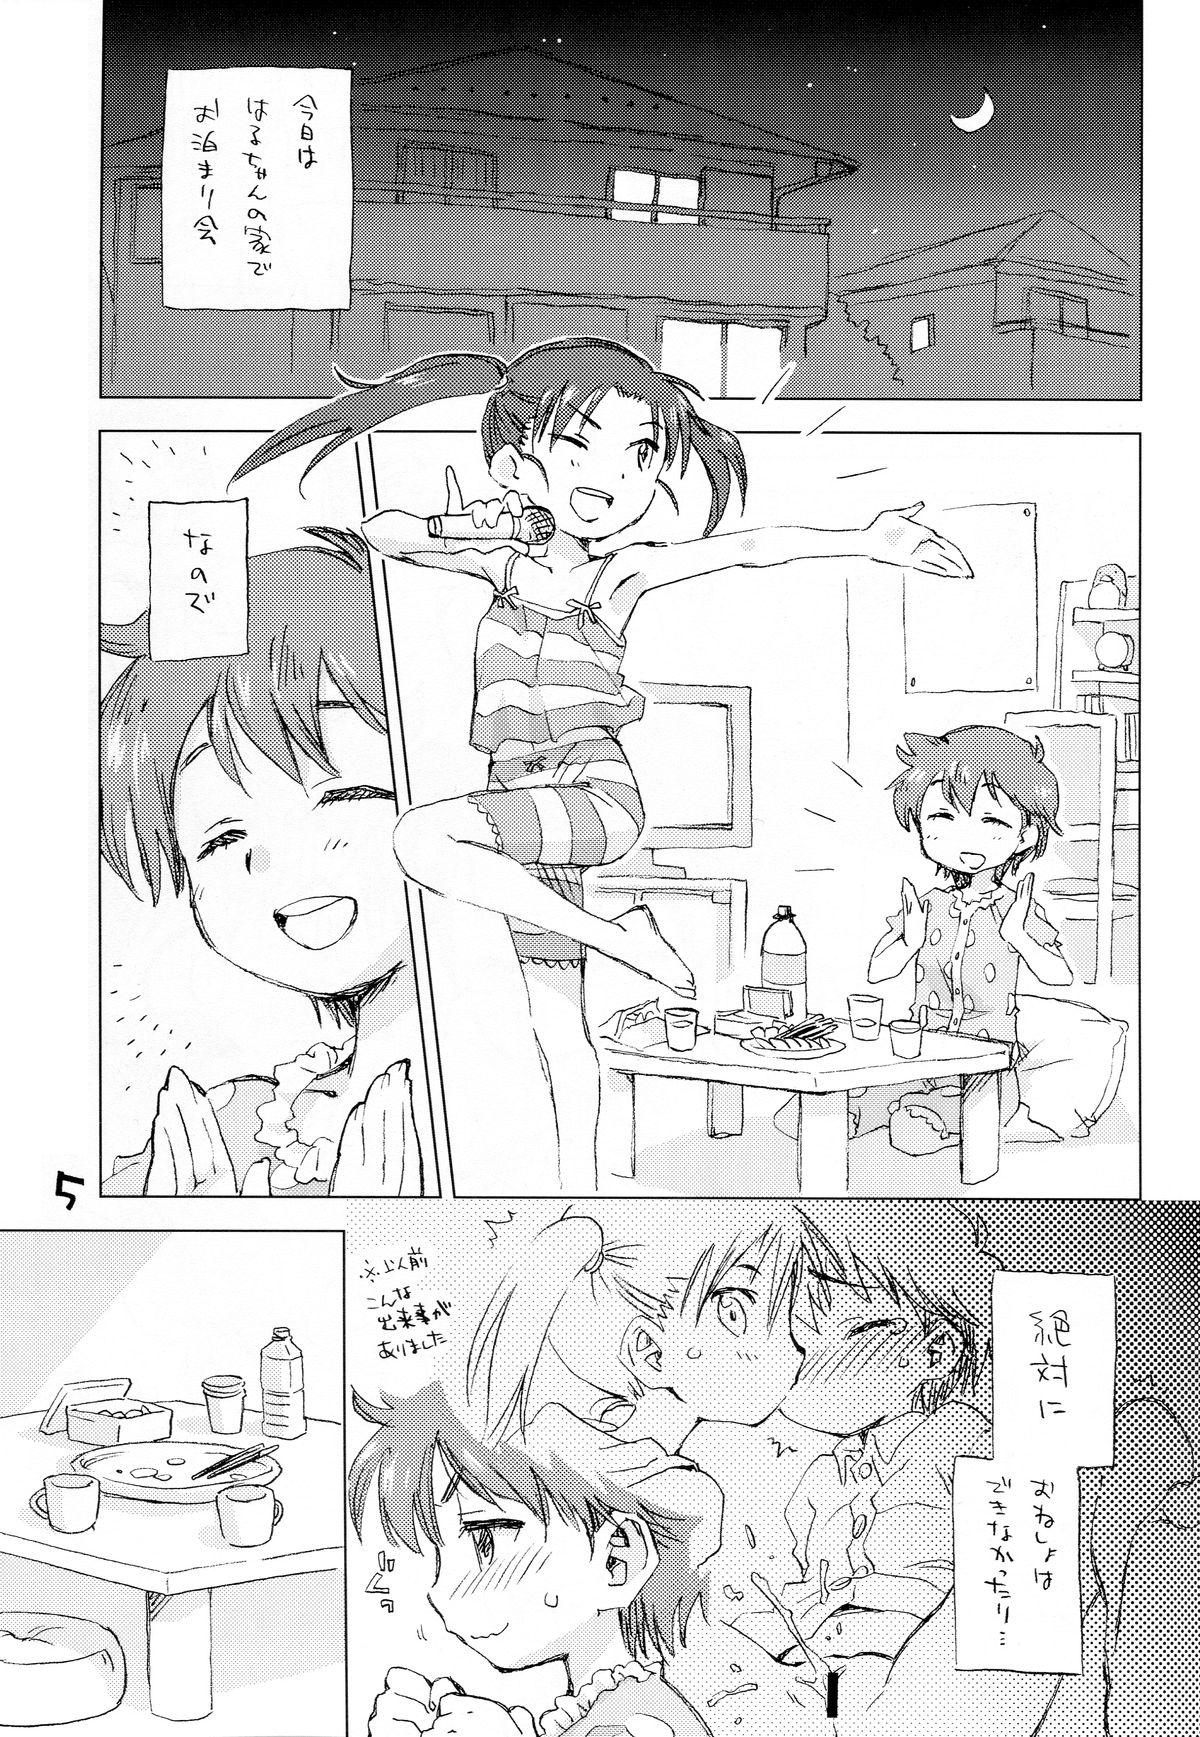 Fresh Okosama Lunch Kagaijugyou 3 Scene - Page 2